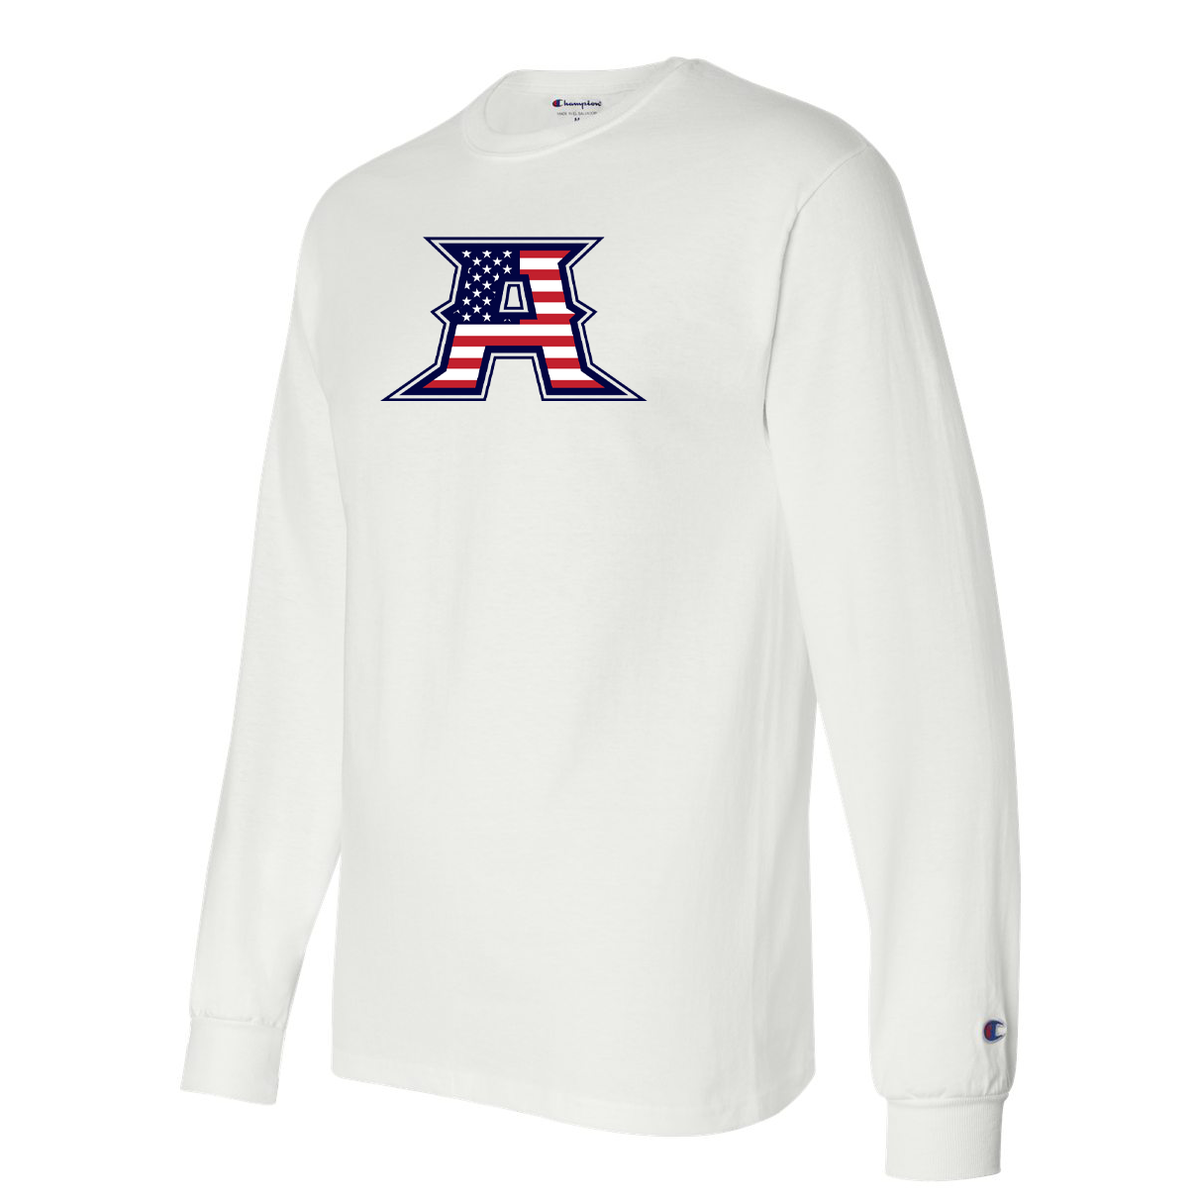 All American Baseball Champion Long Sleeve T-Shirt